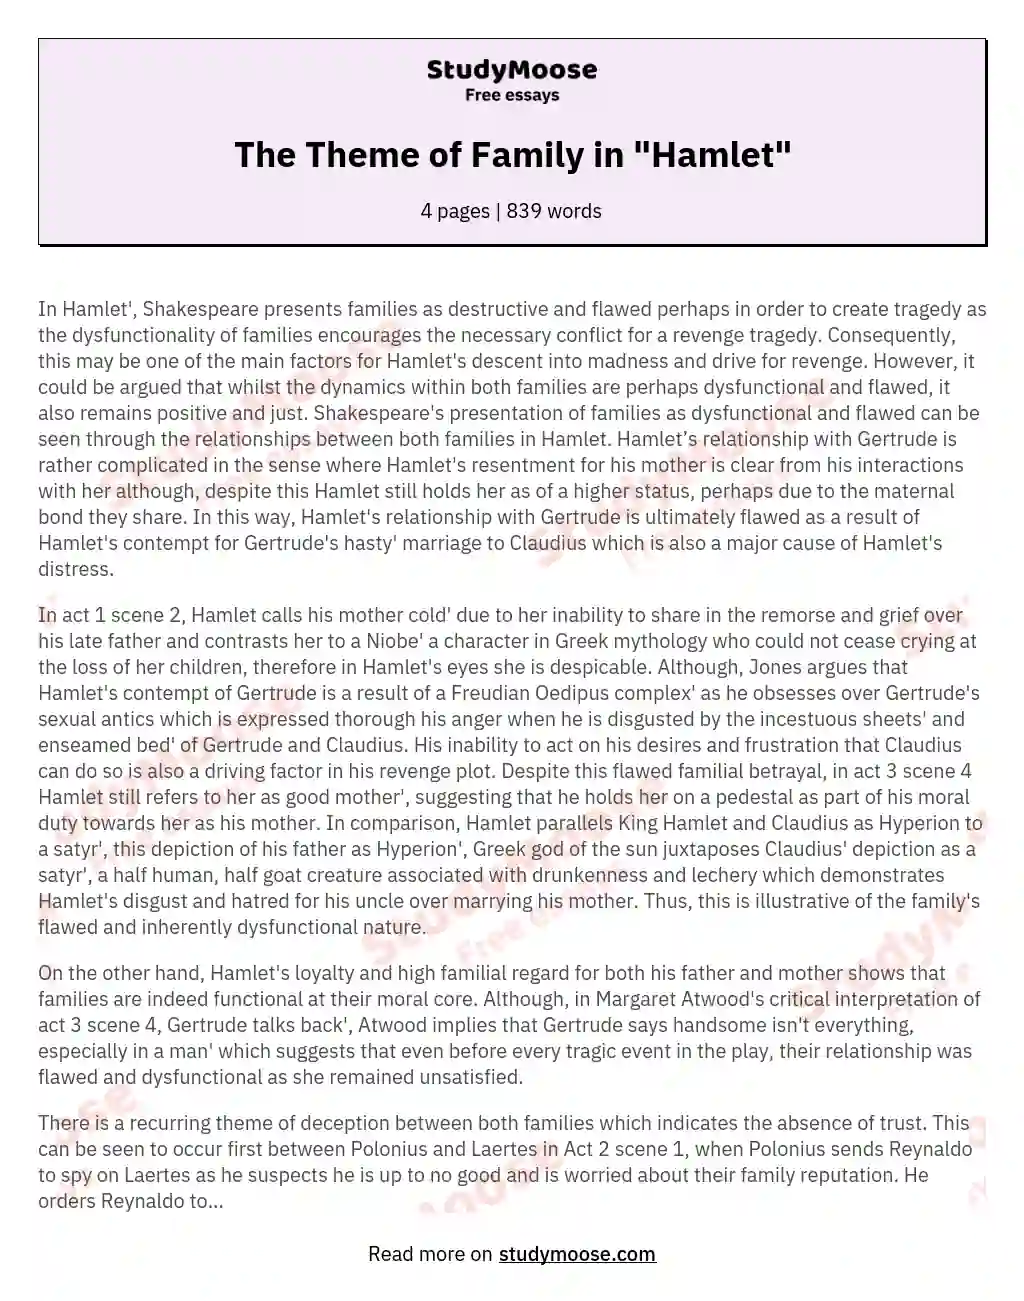 The Theme of Family in "Hamlet" essay